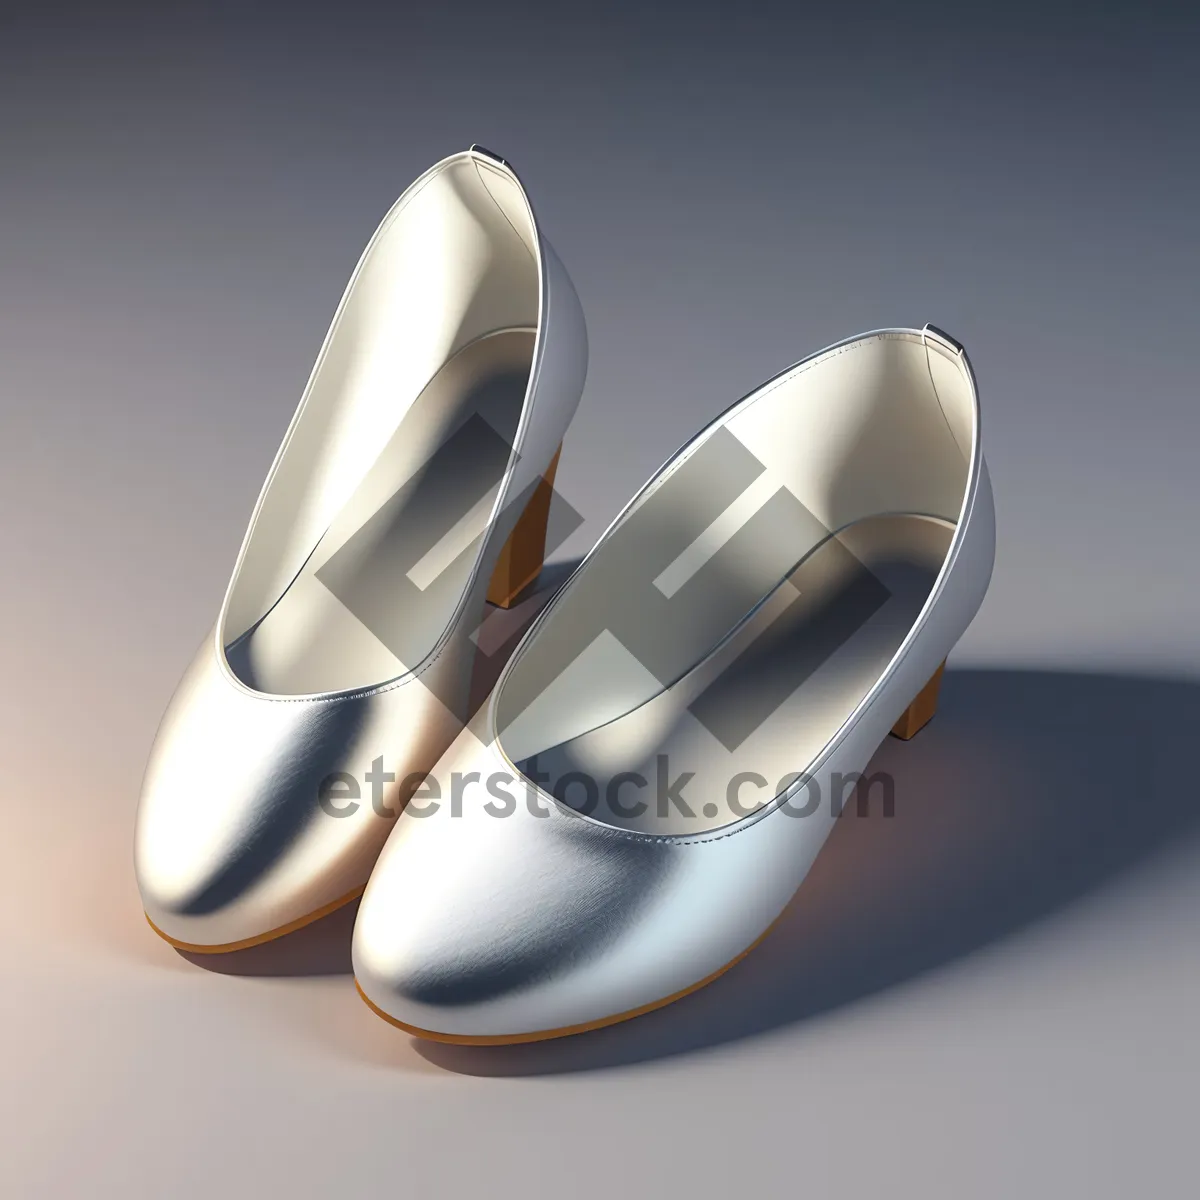 Picture of Shiny Silver 3D Prescription Drug Equipment